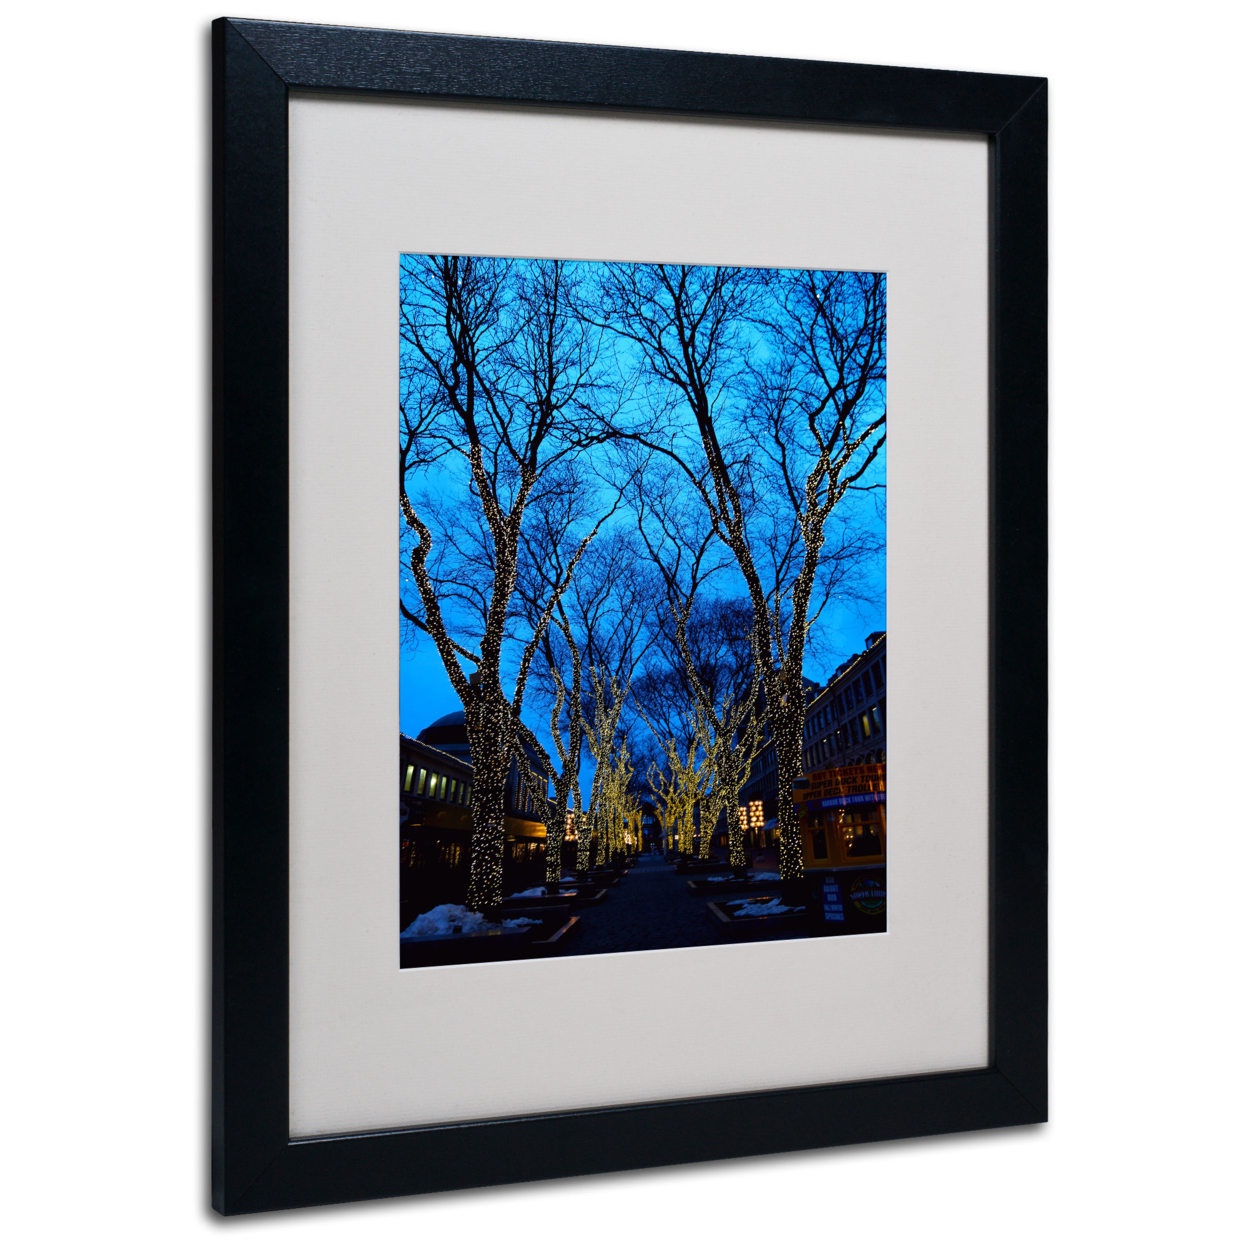 CATeyes 'Boston 2' Black Wooden Framed Art 18 X 22 Inches